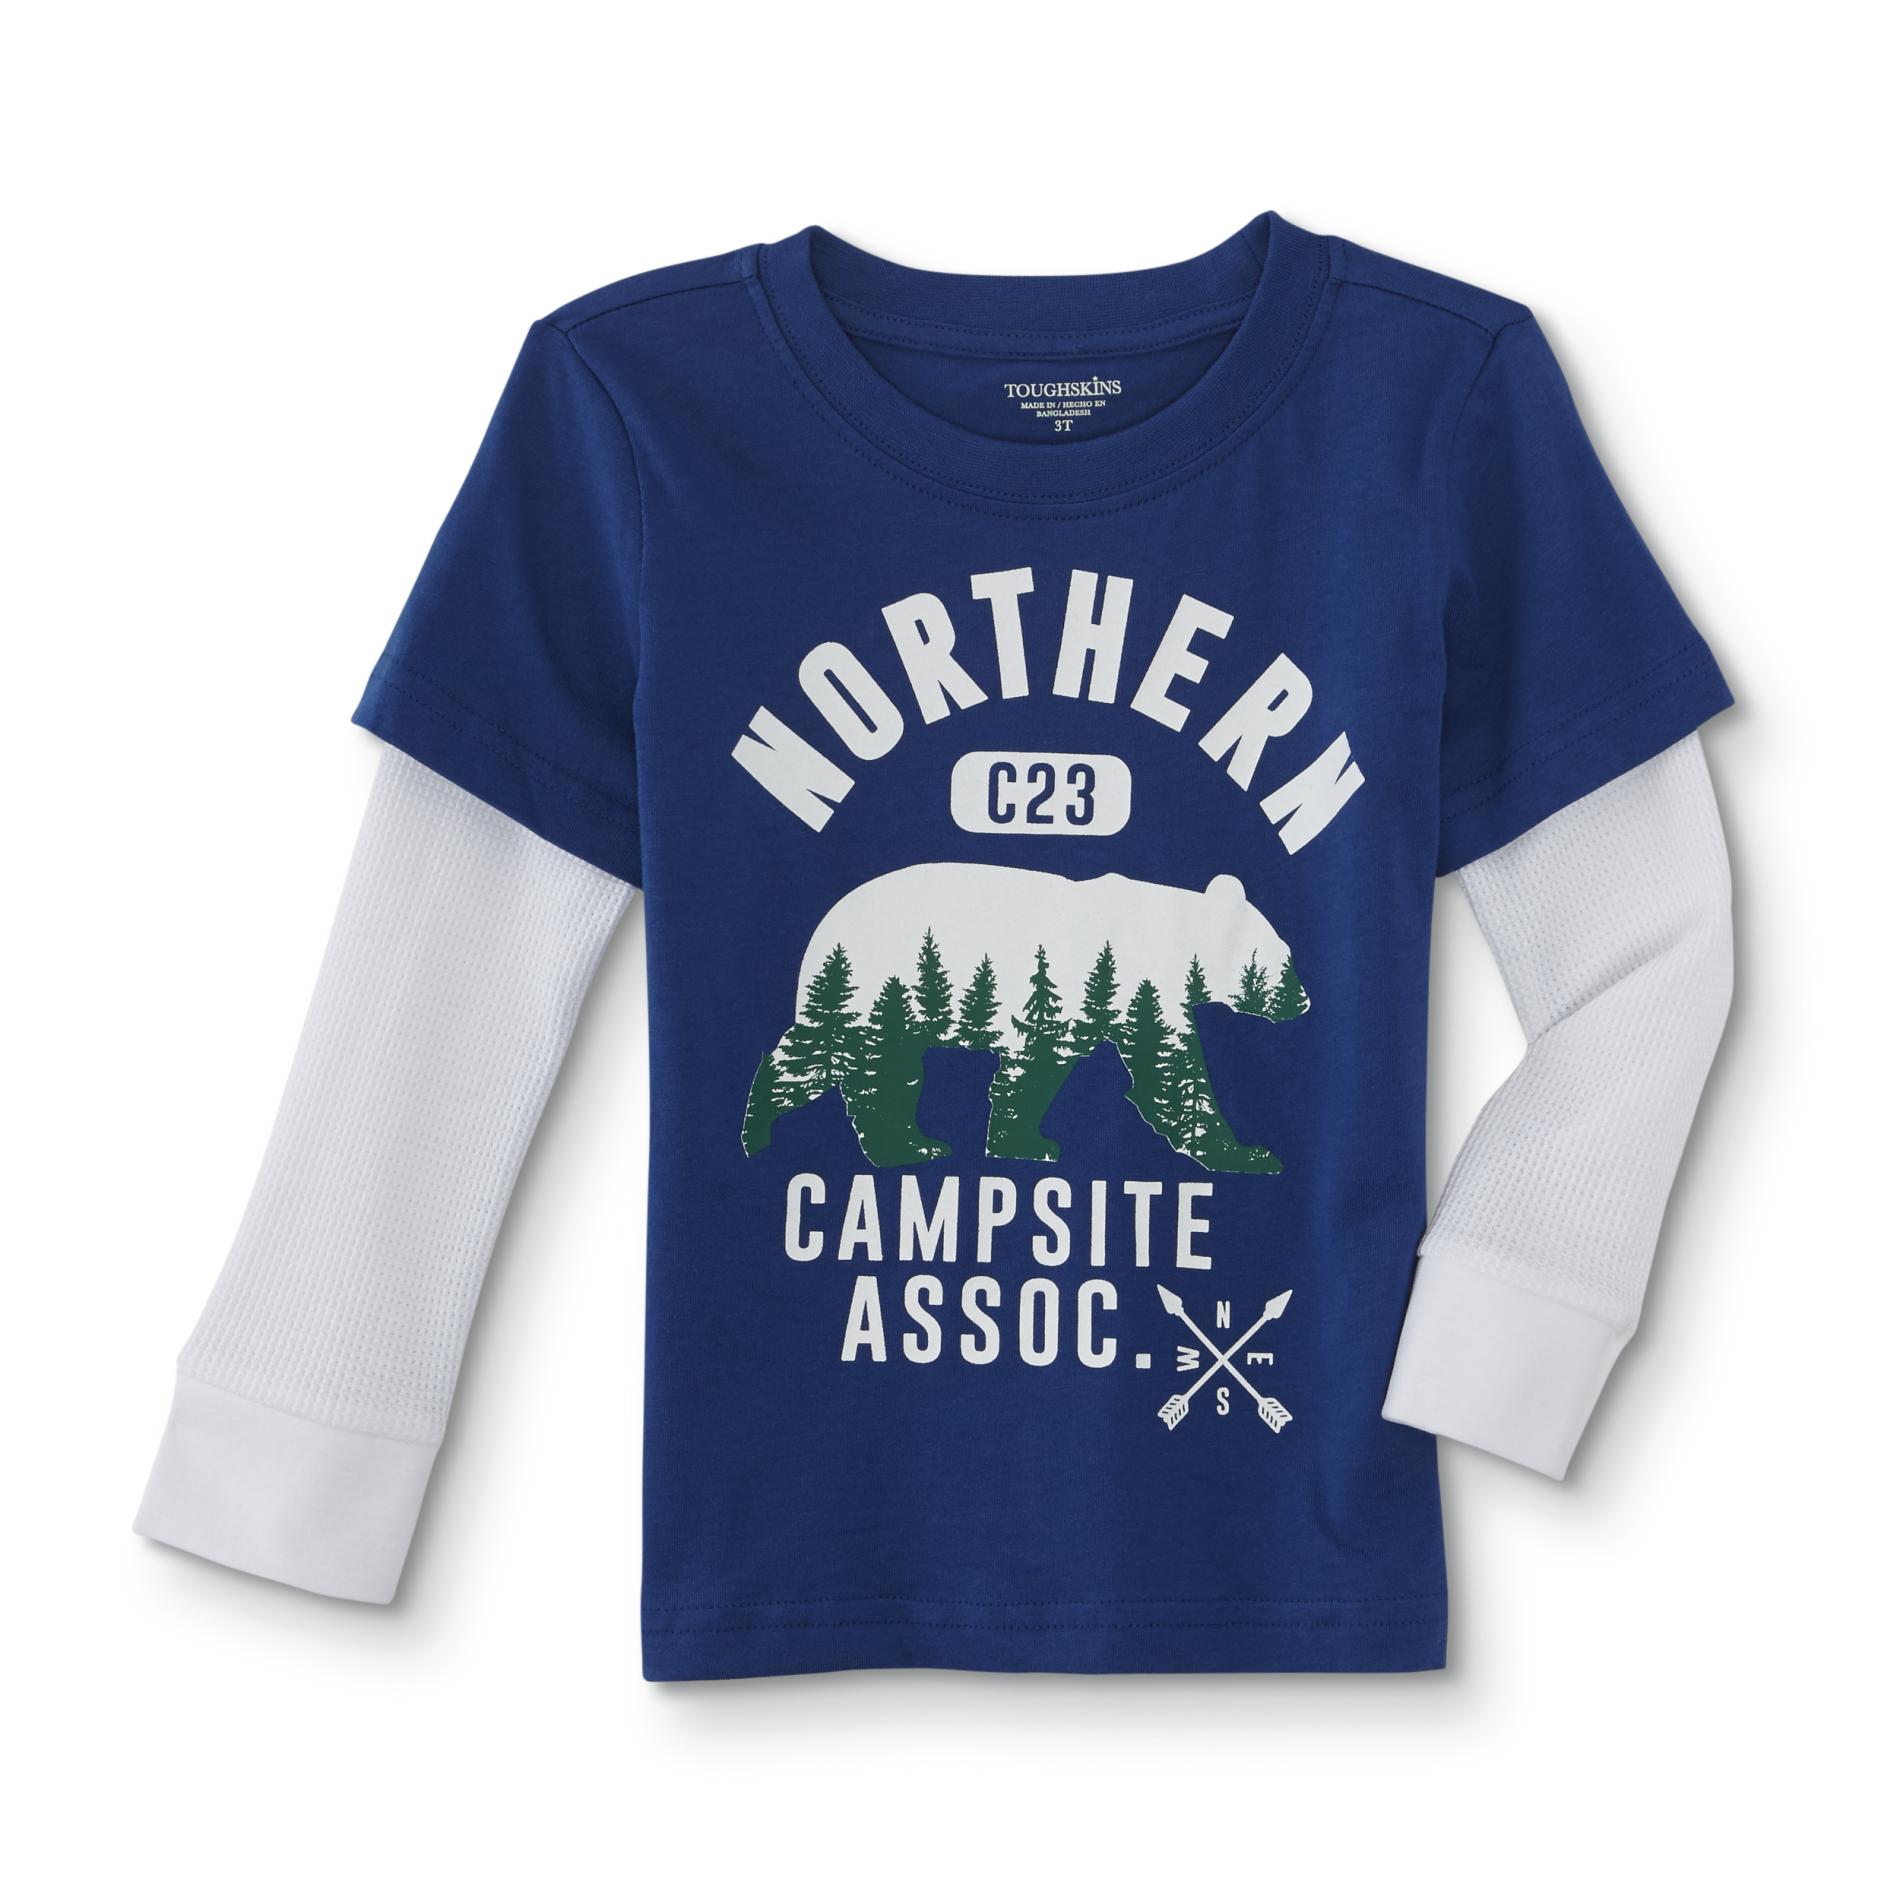 Toughskins Infant & Toddler Boys' Layered-Look Shirt -  Bear/Northern Campsite Assoc.